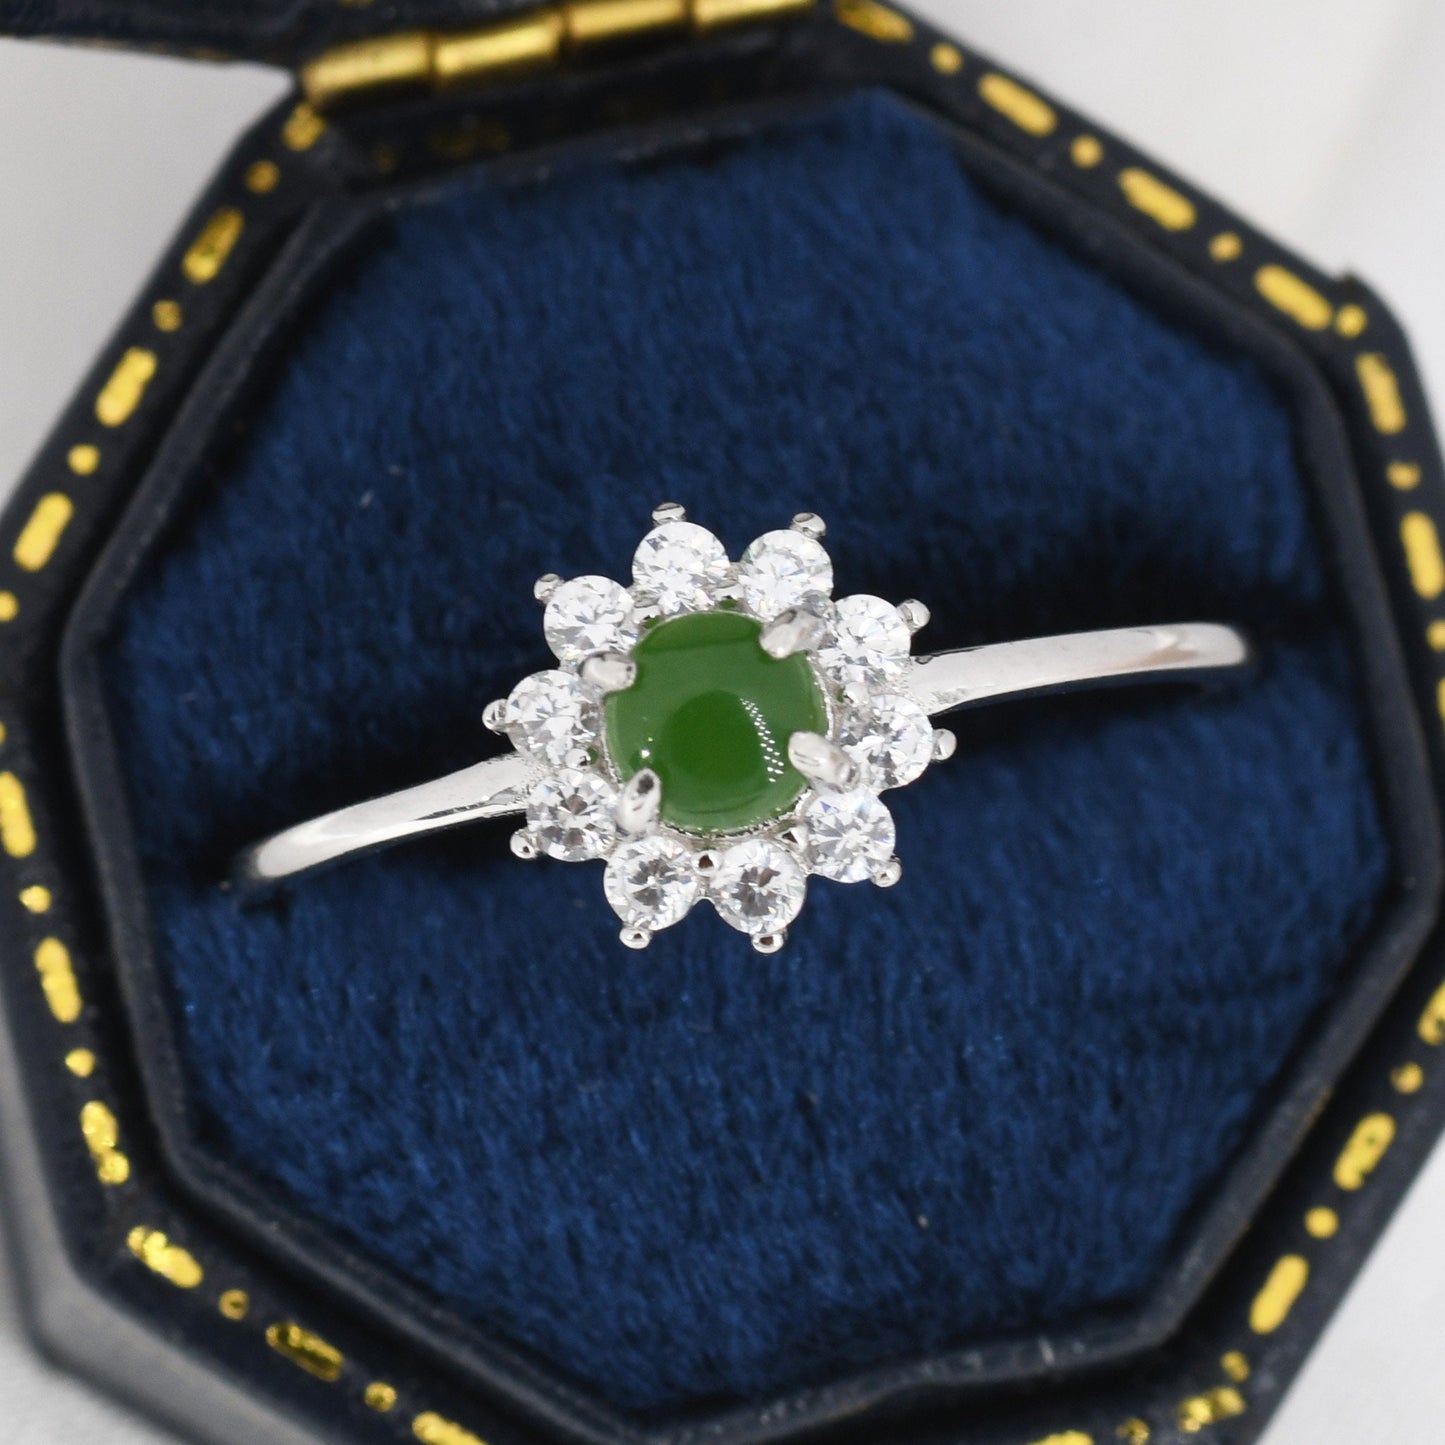 Genuine Jade Stone Halo Ring in Sterling Silver, US 5 - 8, Natural Jade Gemstone Ring,  Crystal Flower Ring